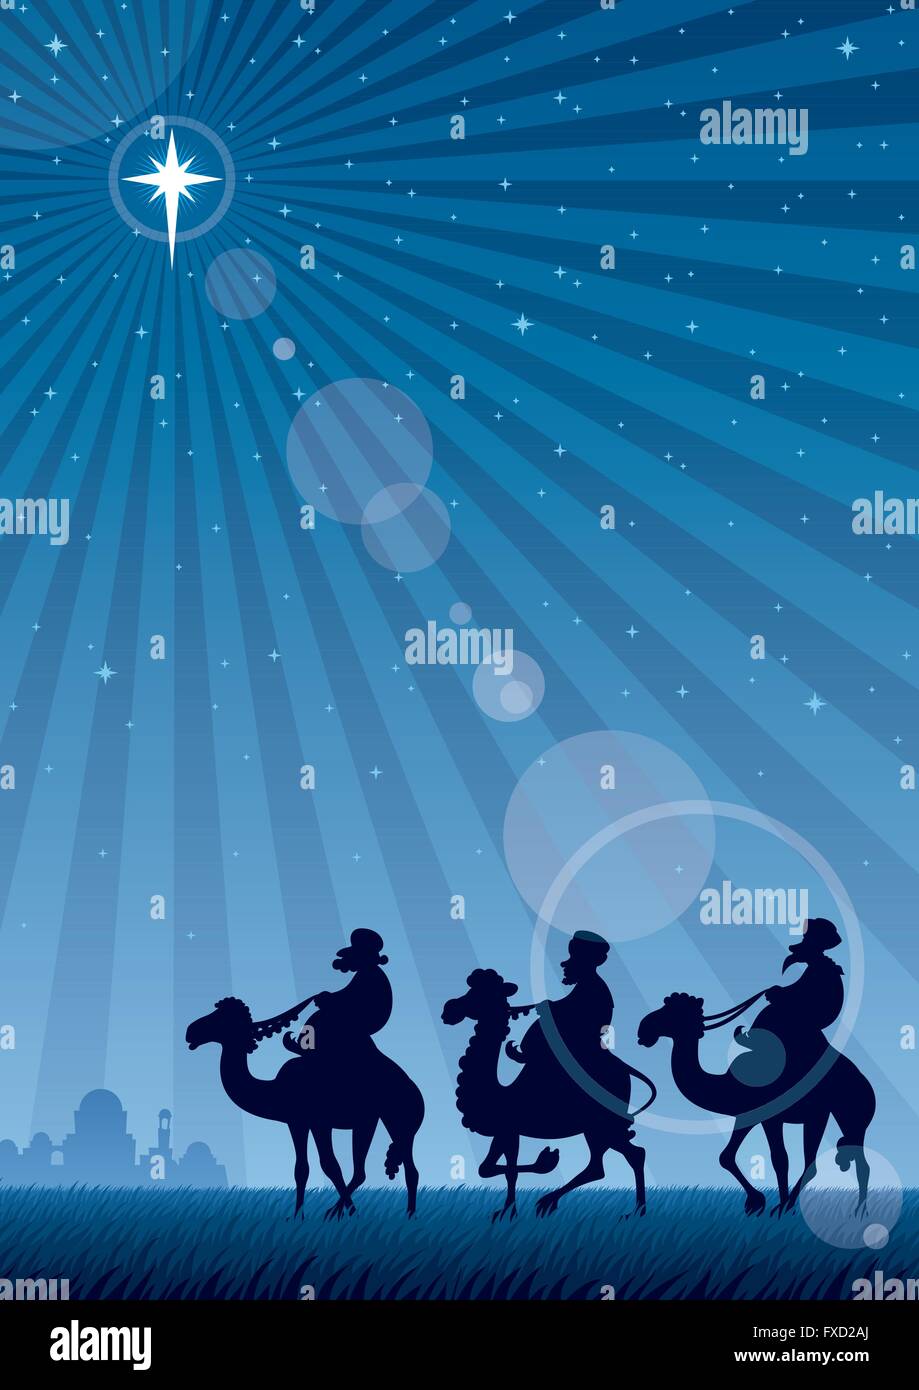 Heiligen Drei Konige Folgen Dem Stern Von Bethlehem Stock Vektorgrafik Alamy